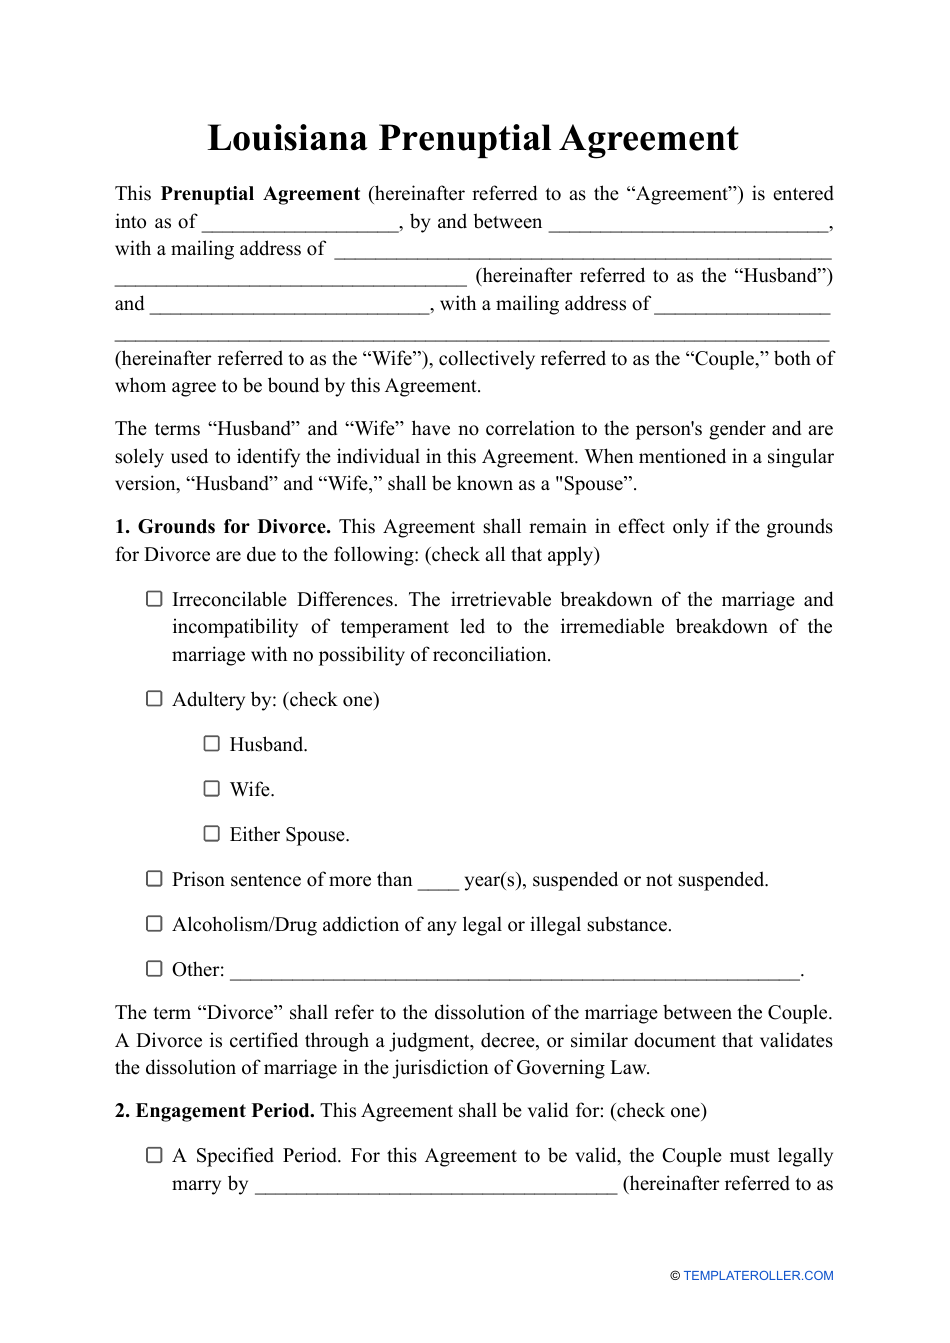 Prenuptial Agreement Template - Louisiana, Page 1